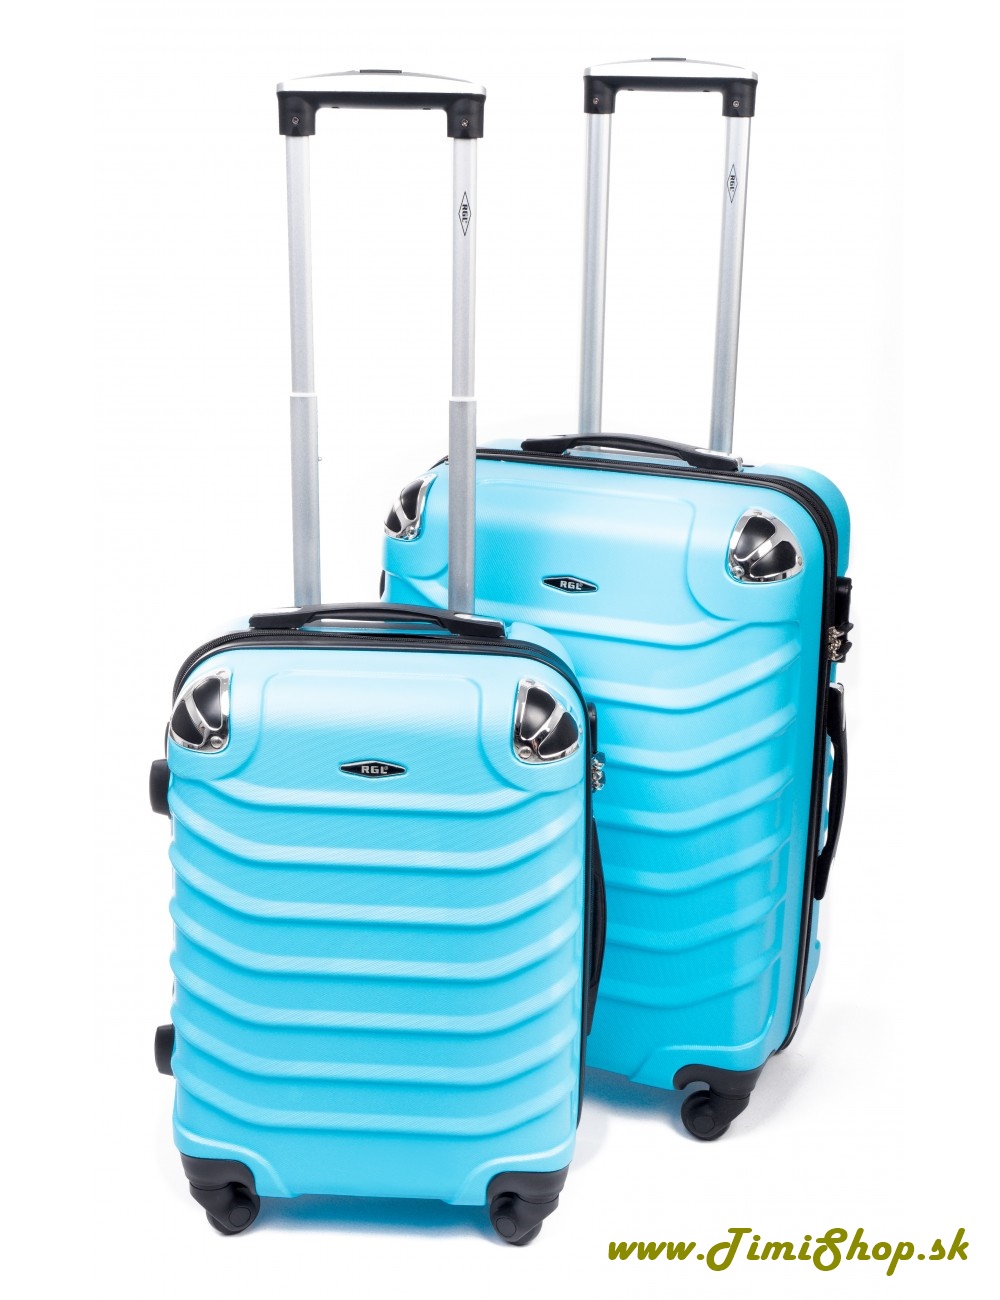 Sada cestovných kufrov 2v1 - Sv.modra